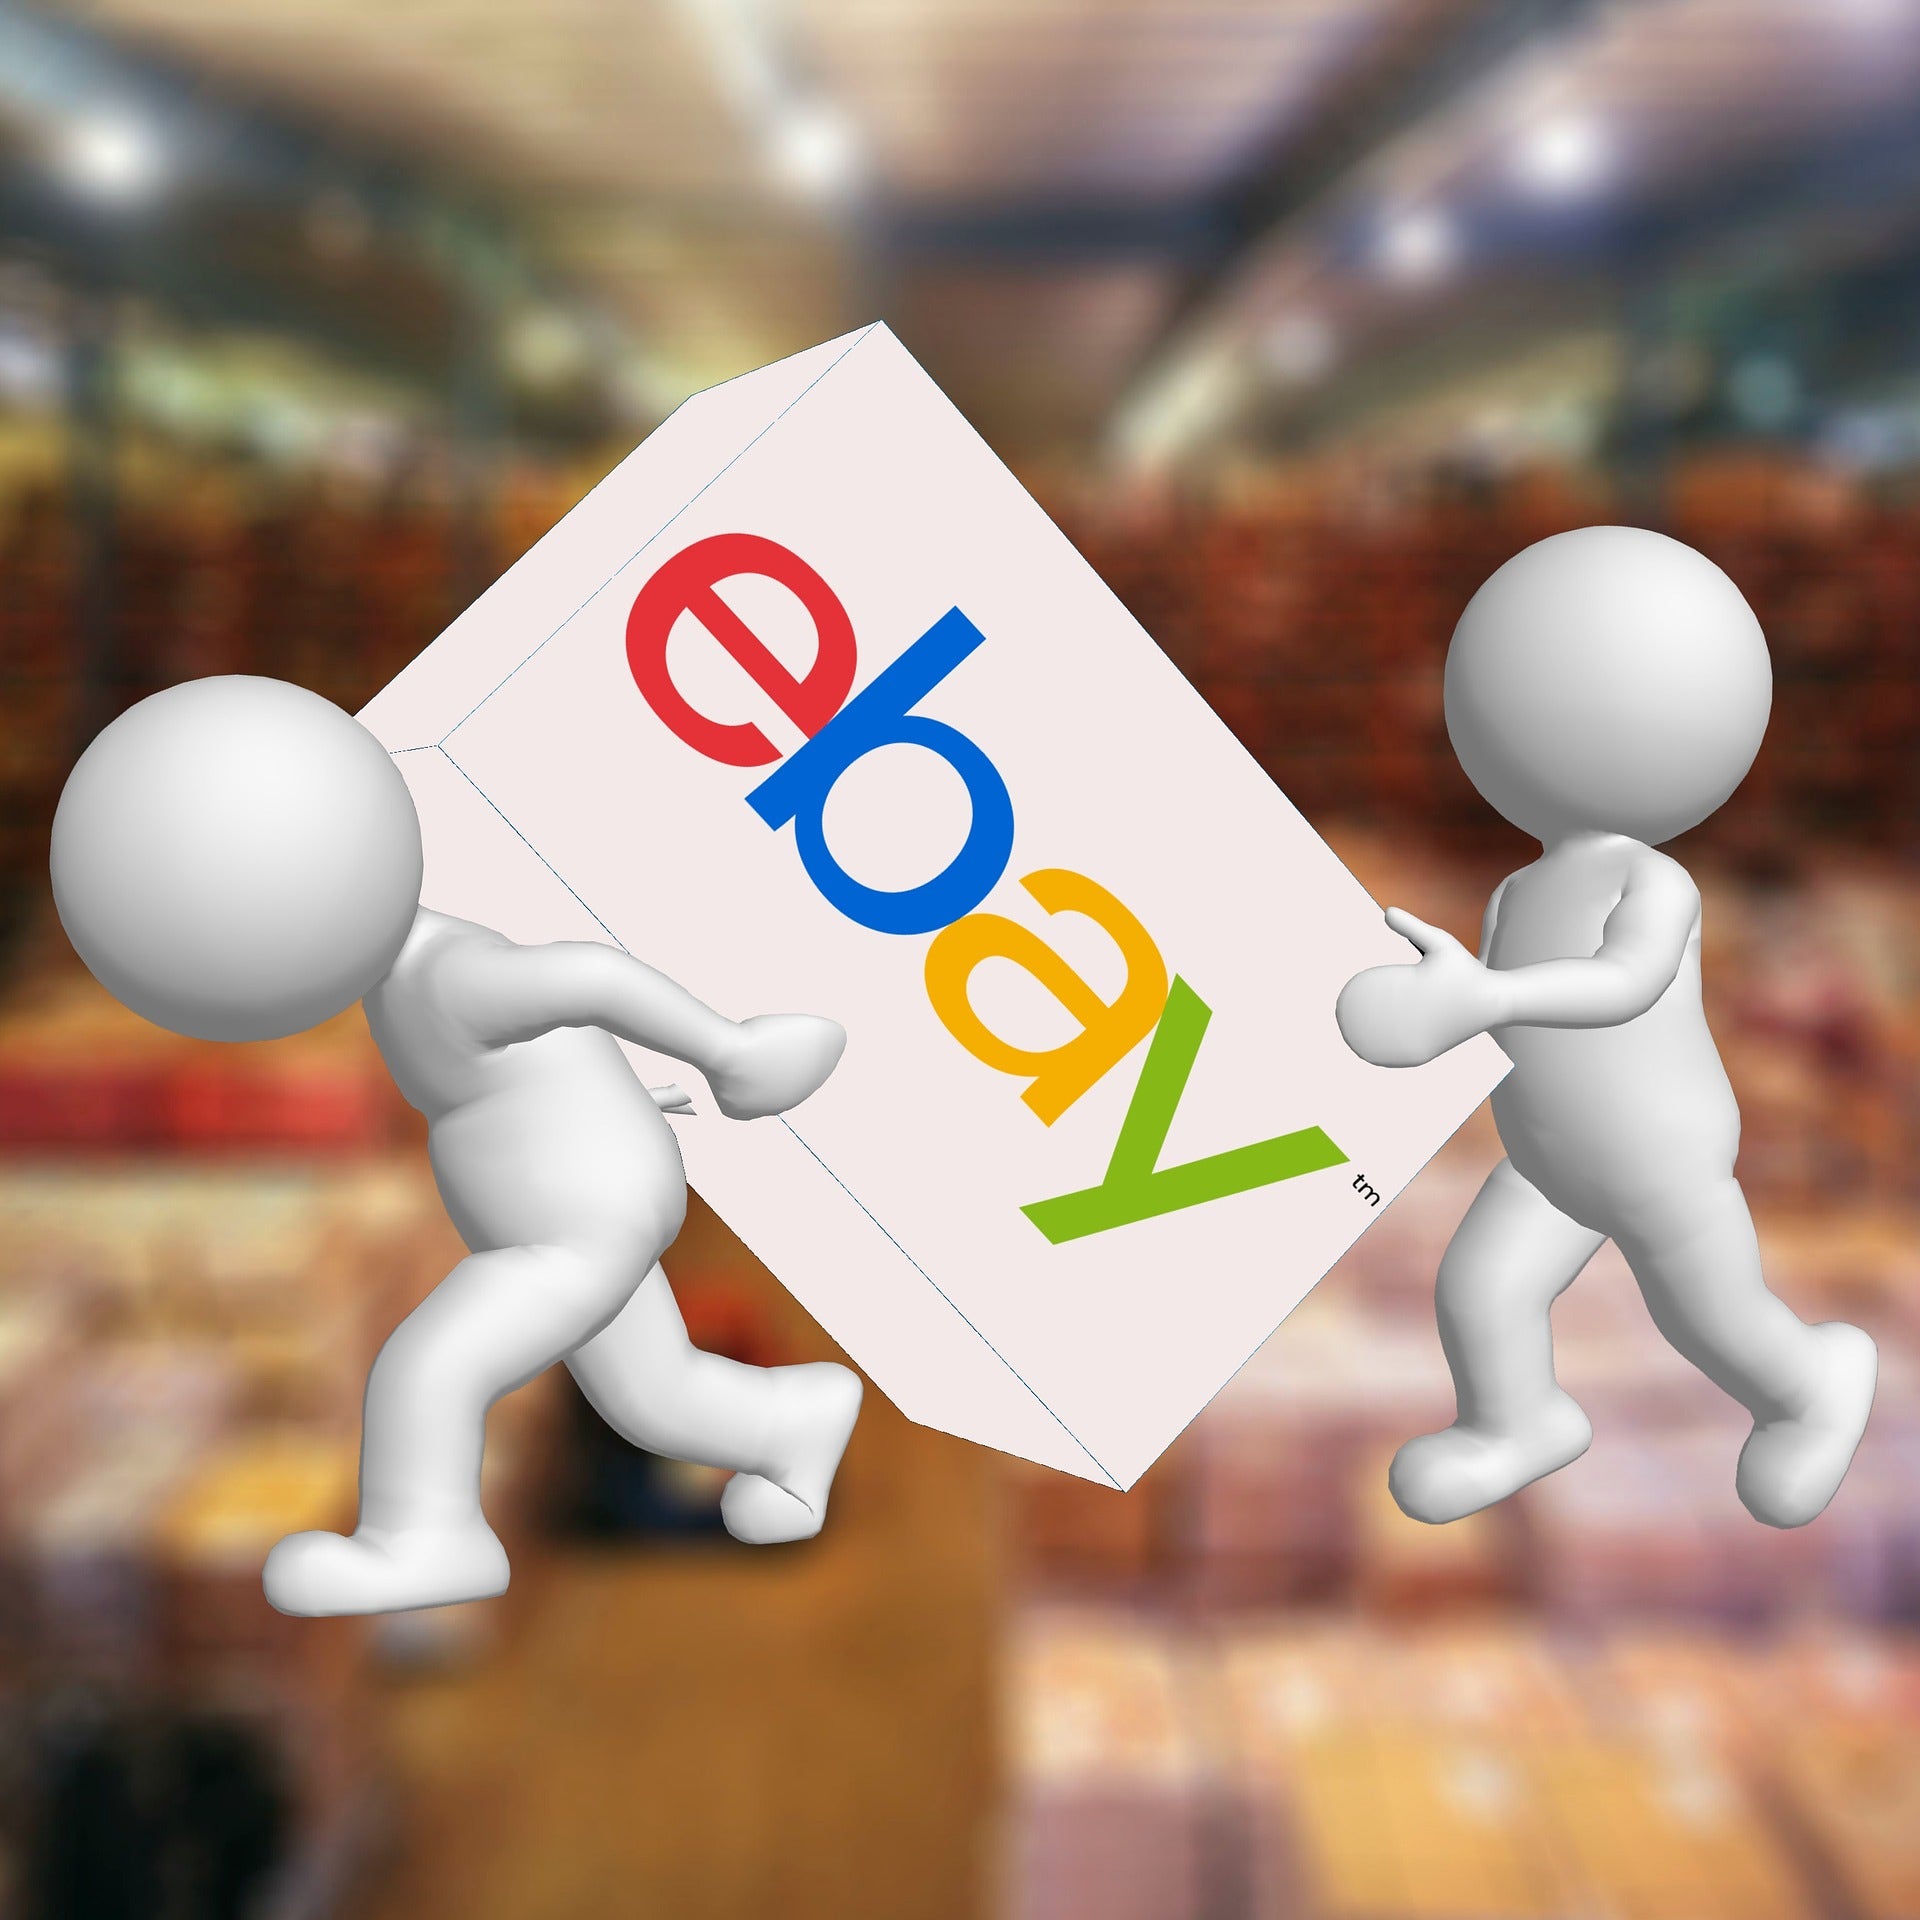 eBay Lets Go 500 Employees To Counter Macro Uncertainties